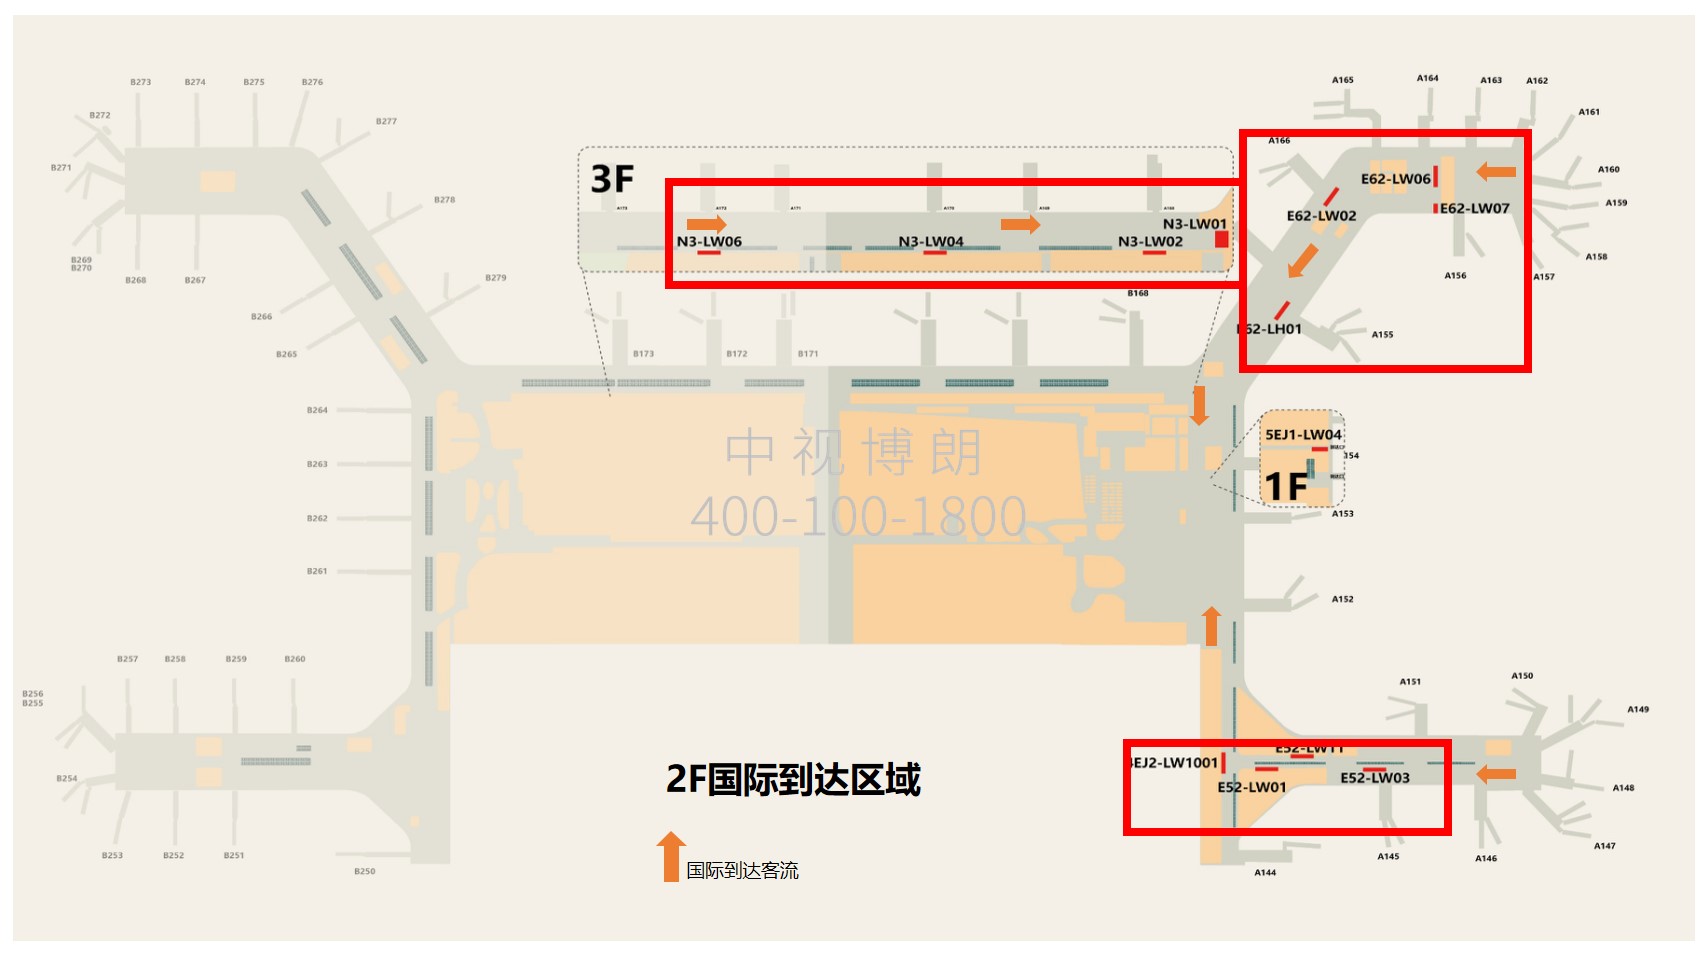 Guangzhou Airport Advertising-T2国际到达地面灯箱套装2点位图